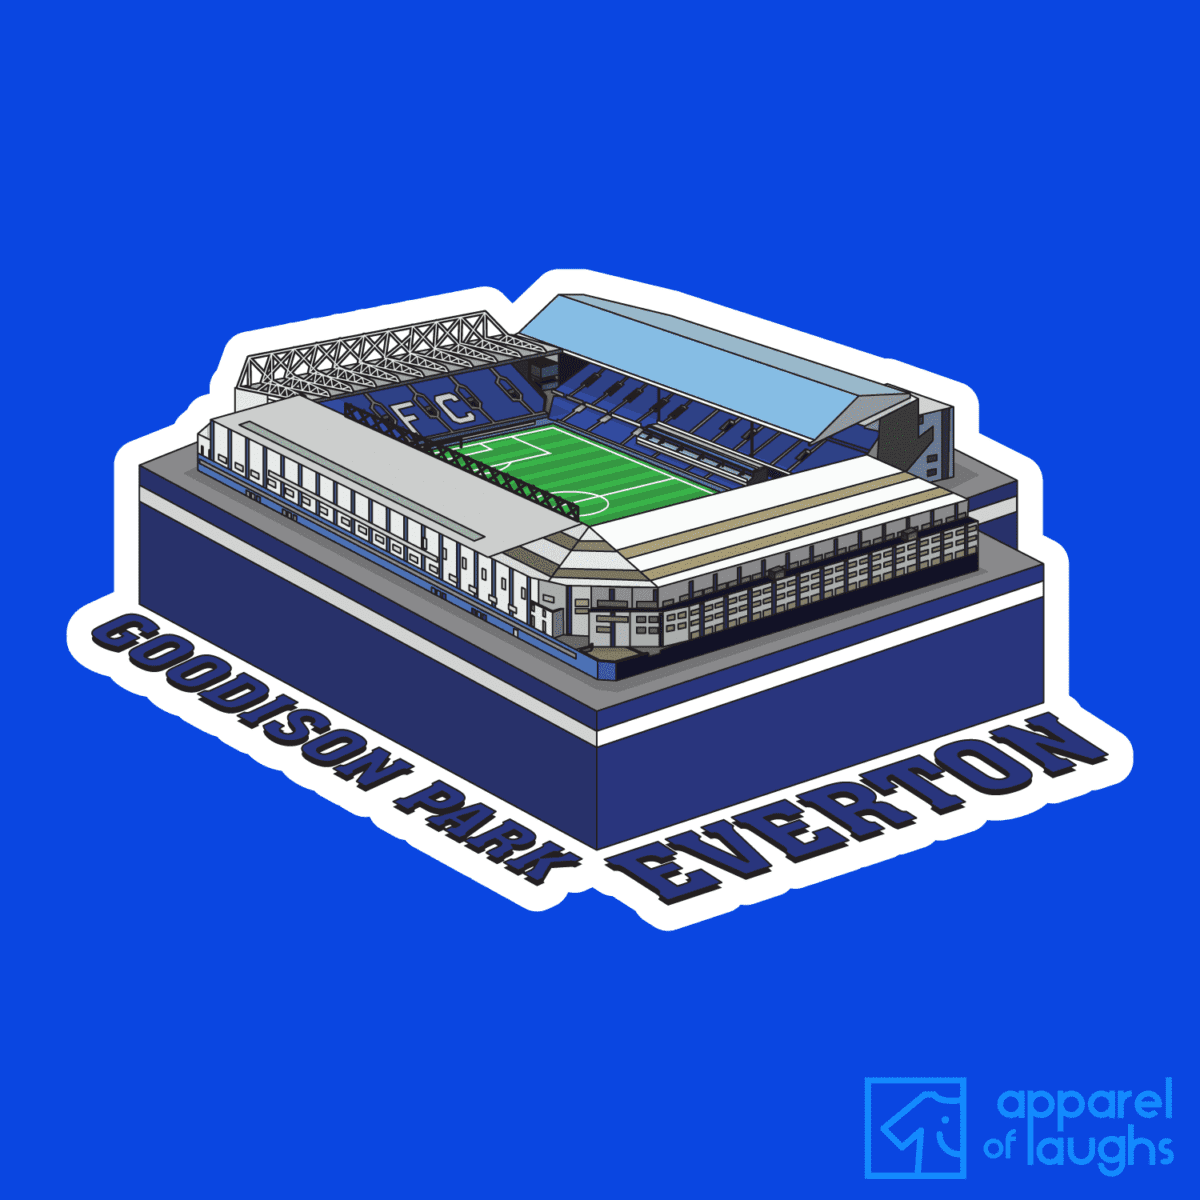 Everton Goodison Park Football Stadium Illustration T Shirt Design Royal Blue